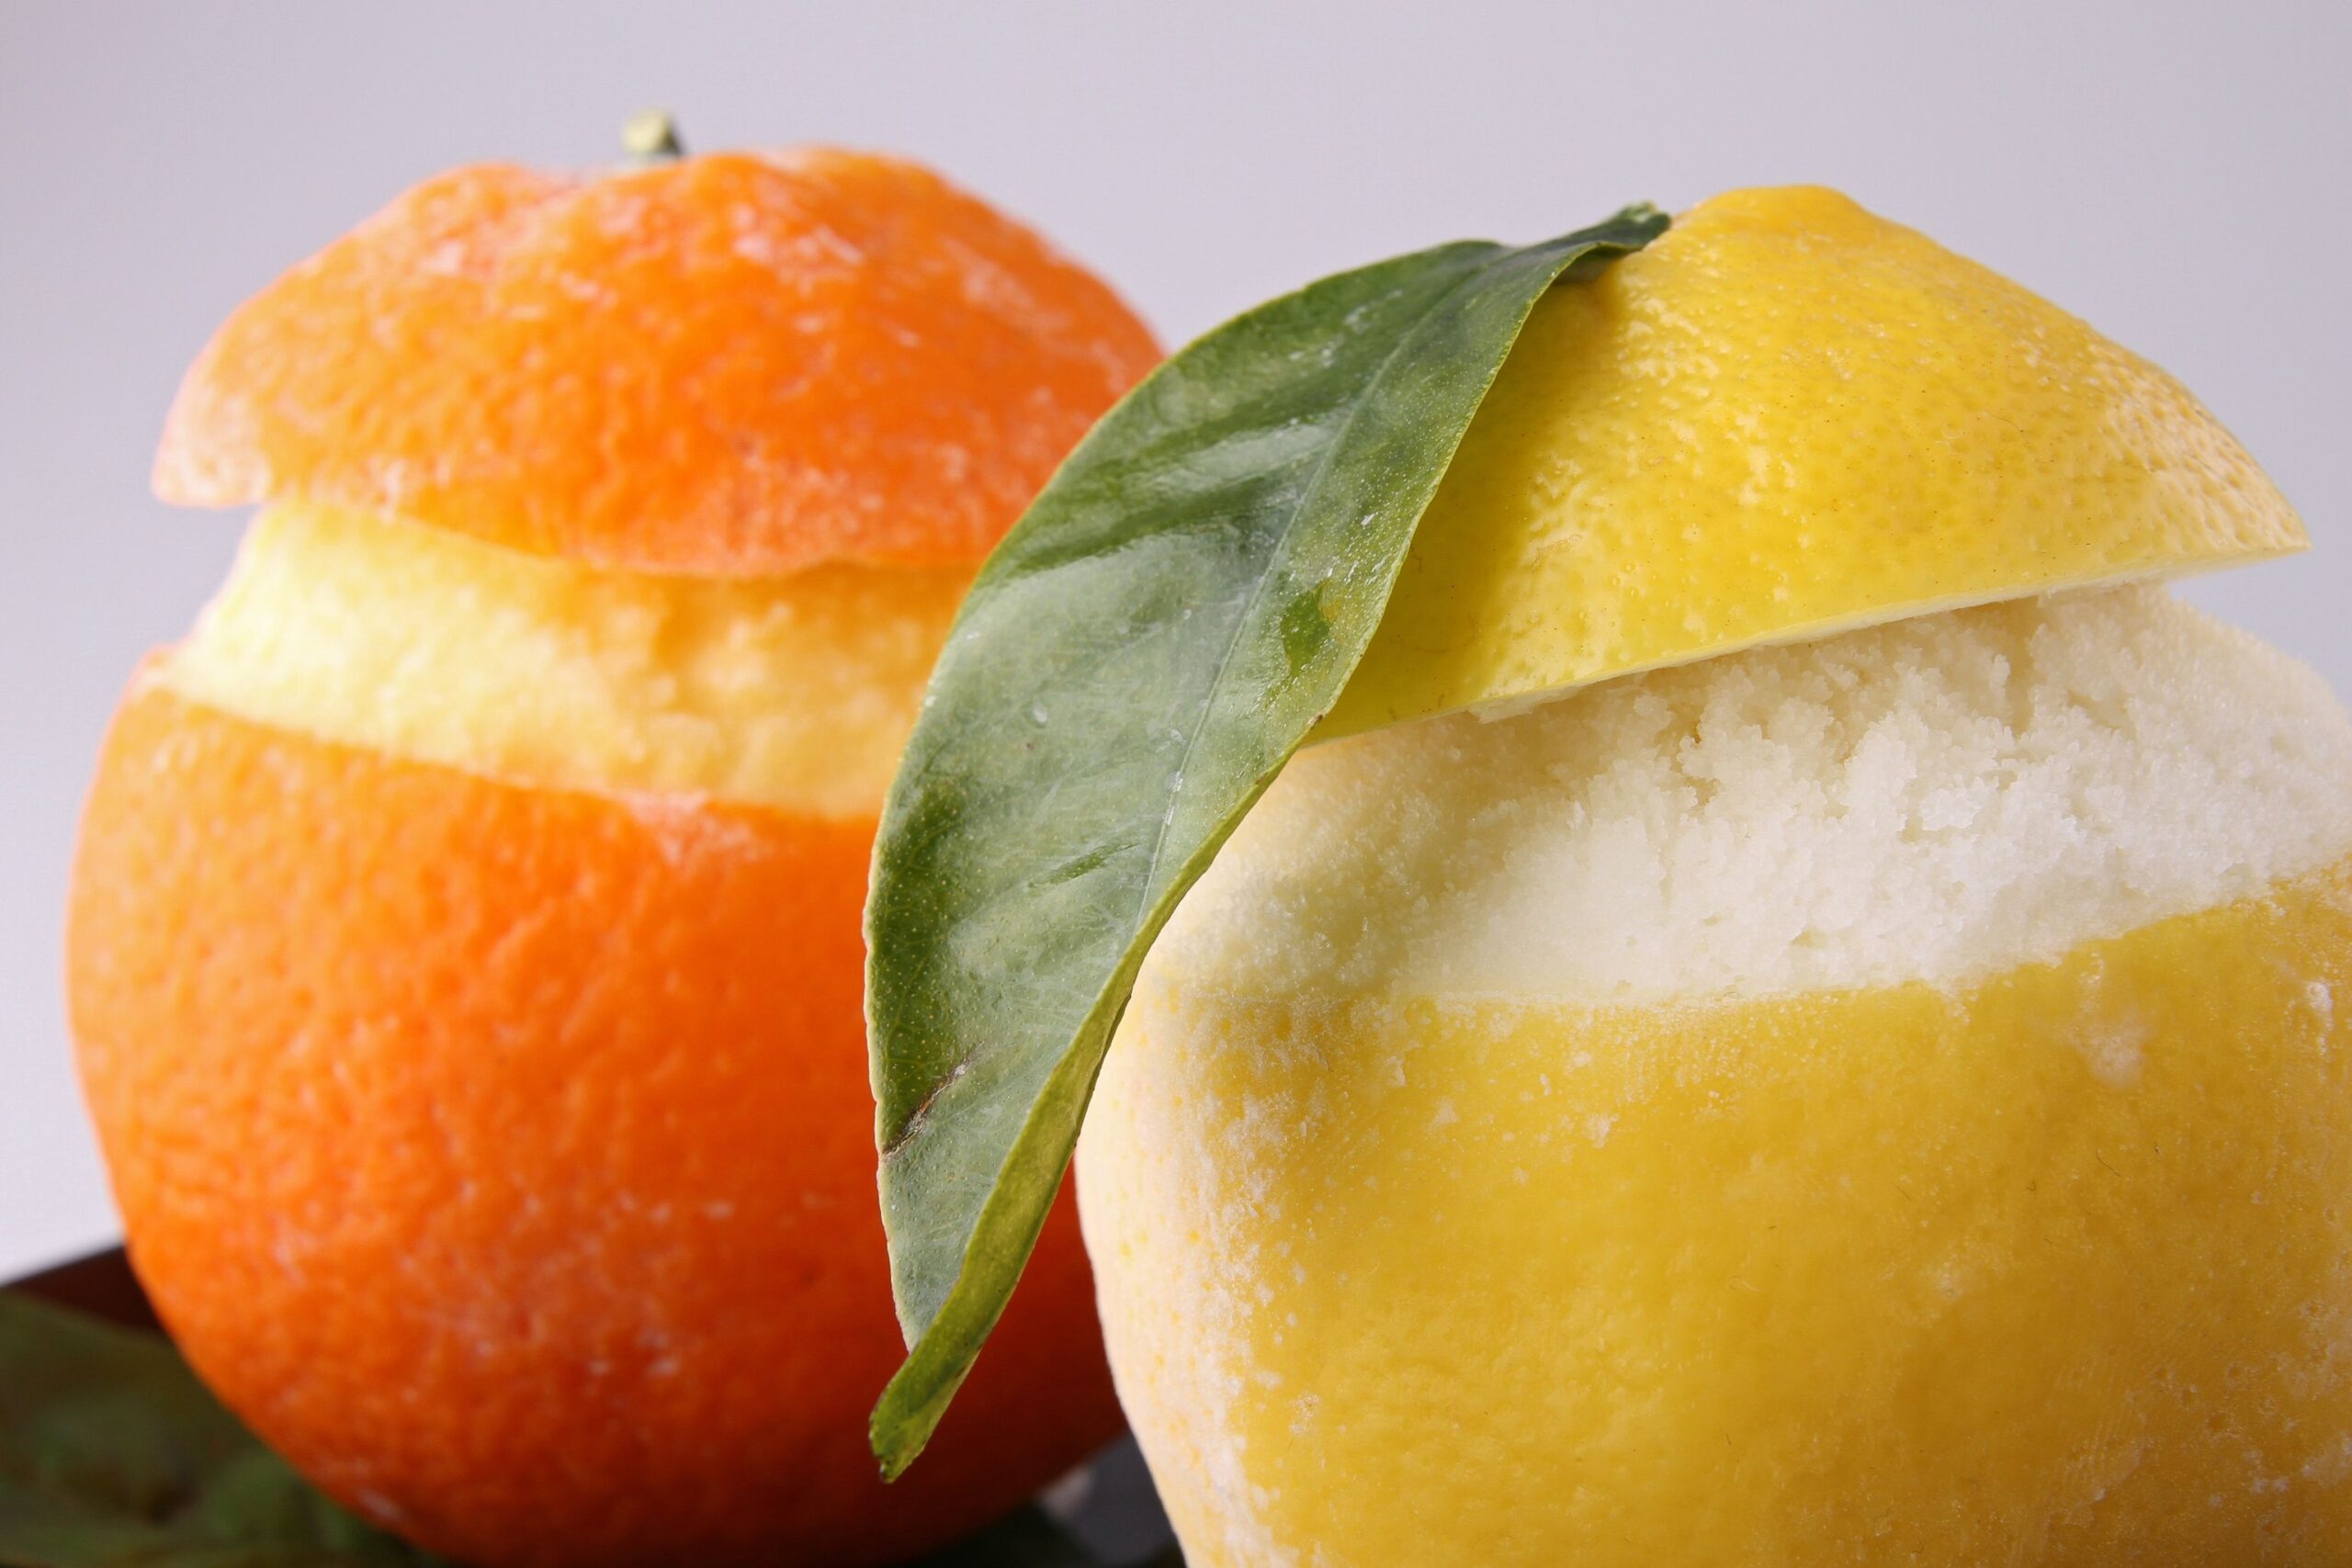 Sorbetto al limone: lo preparo in casa senza gelatiera